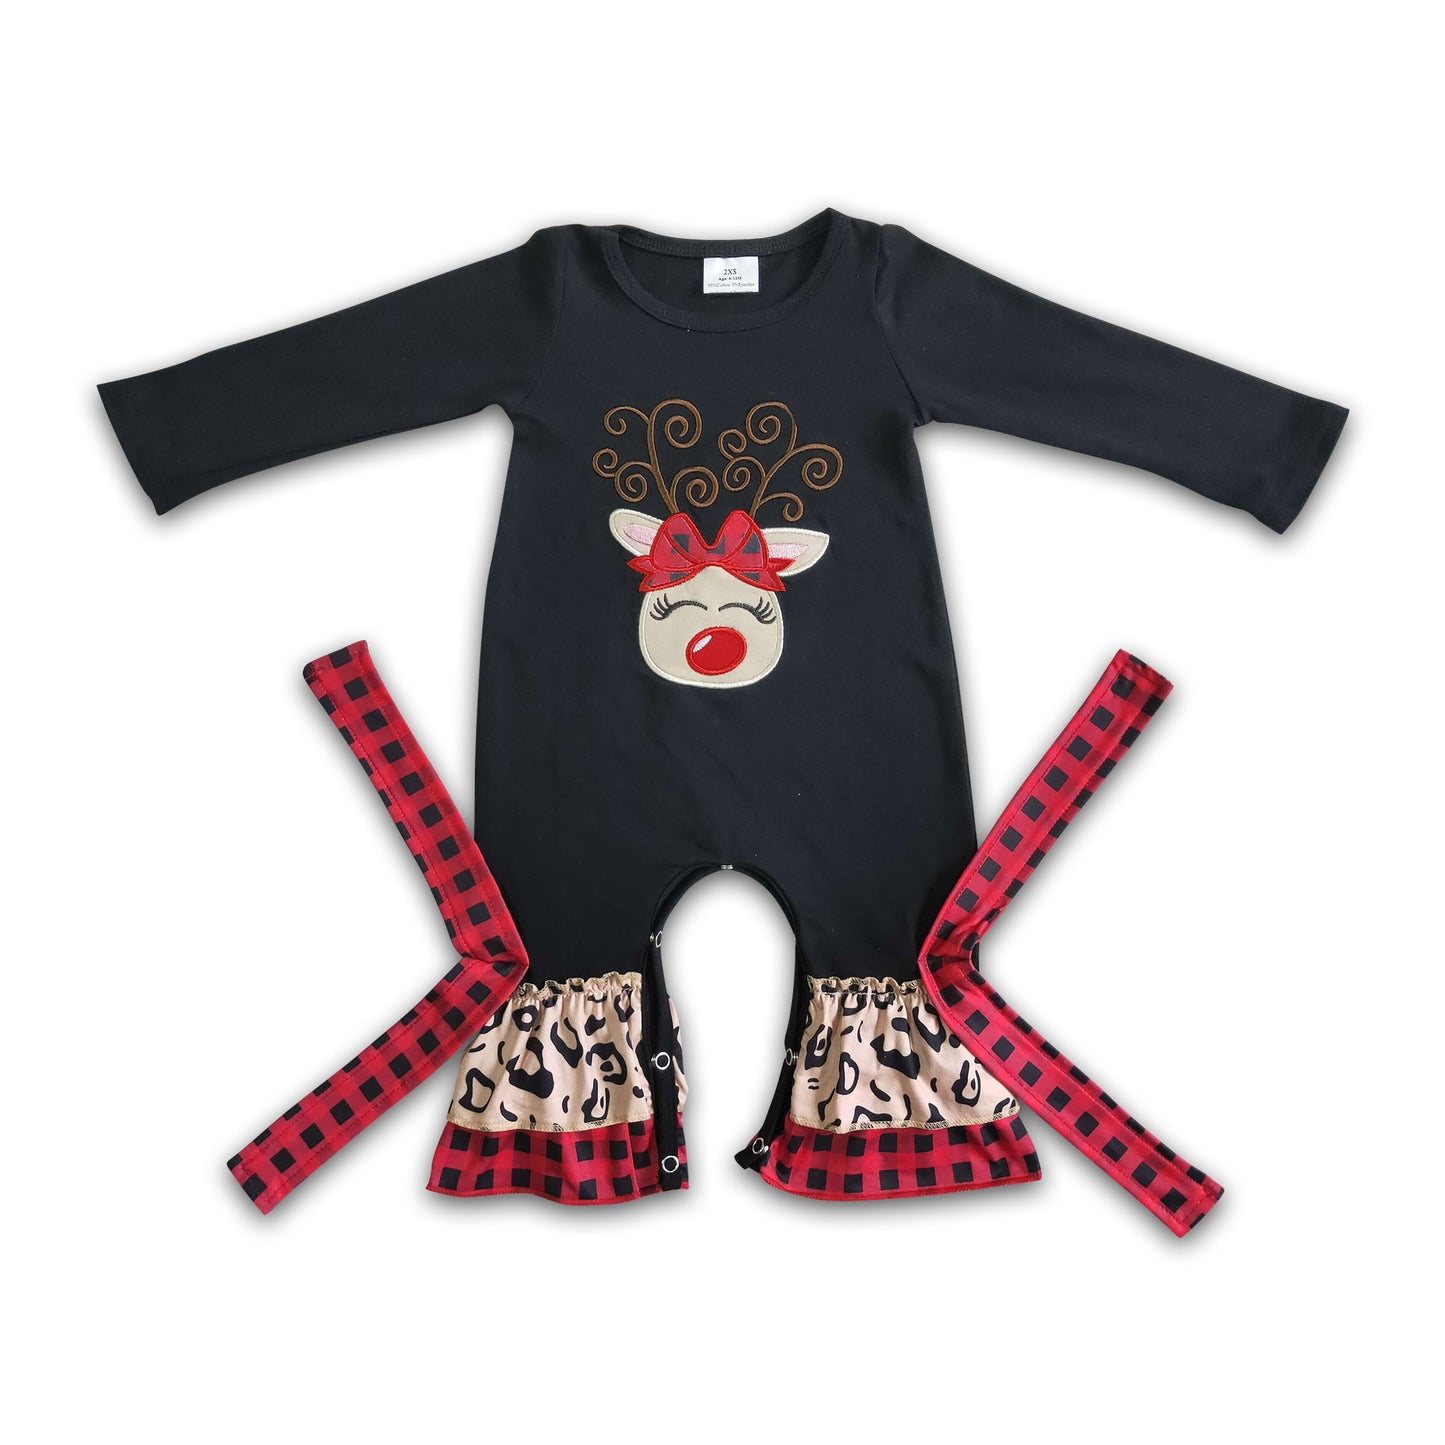 Reindeer embroidery baby Christmas romper